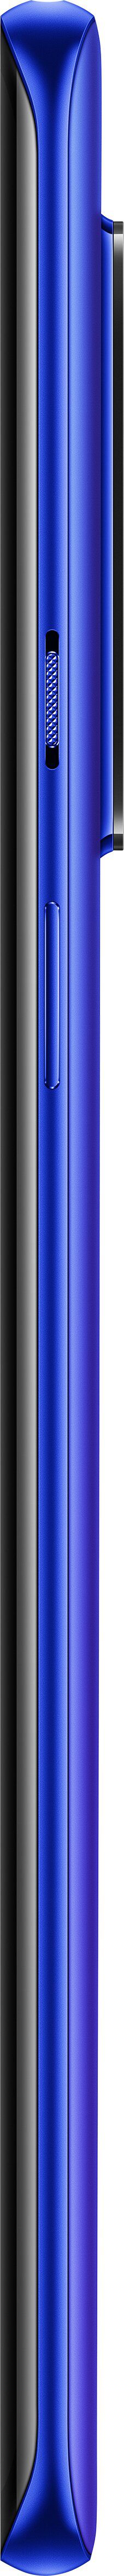 OnePlus 8 Pro Ultramarine Blue